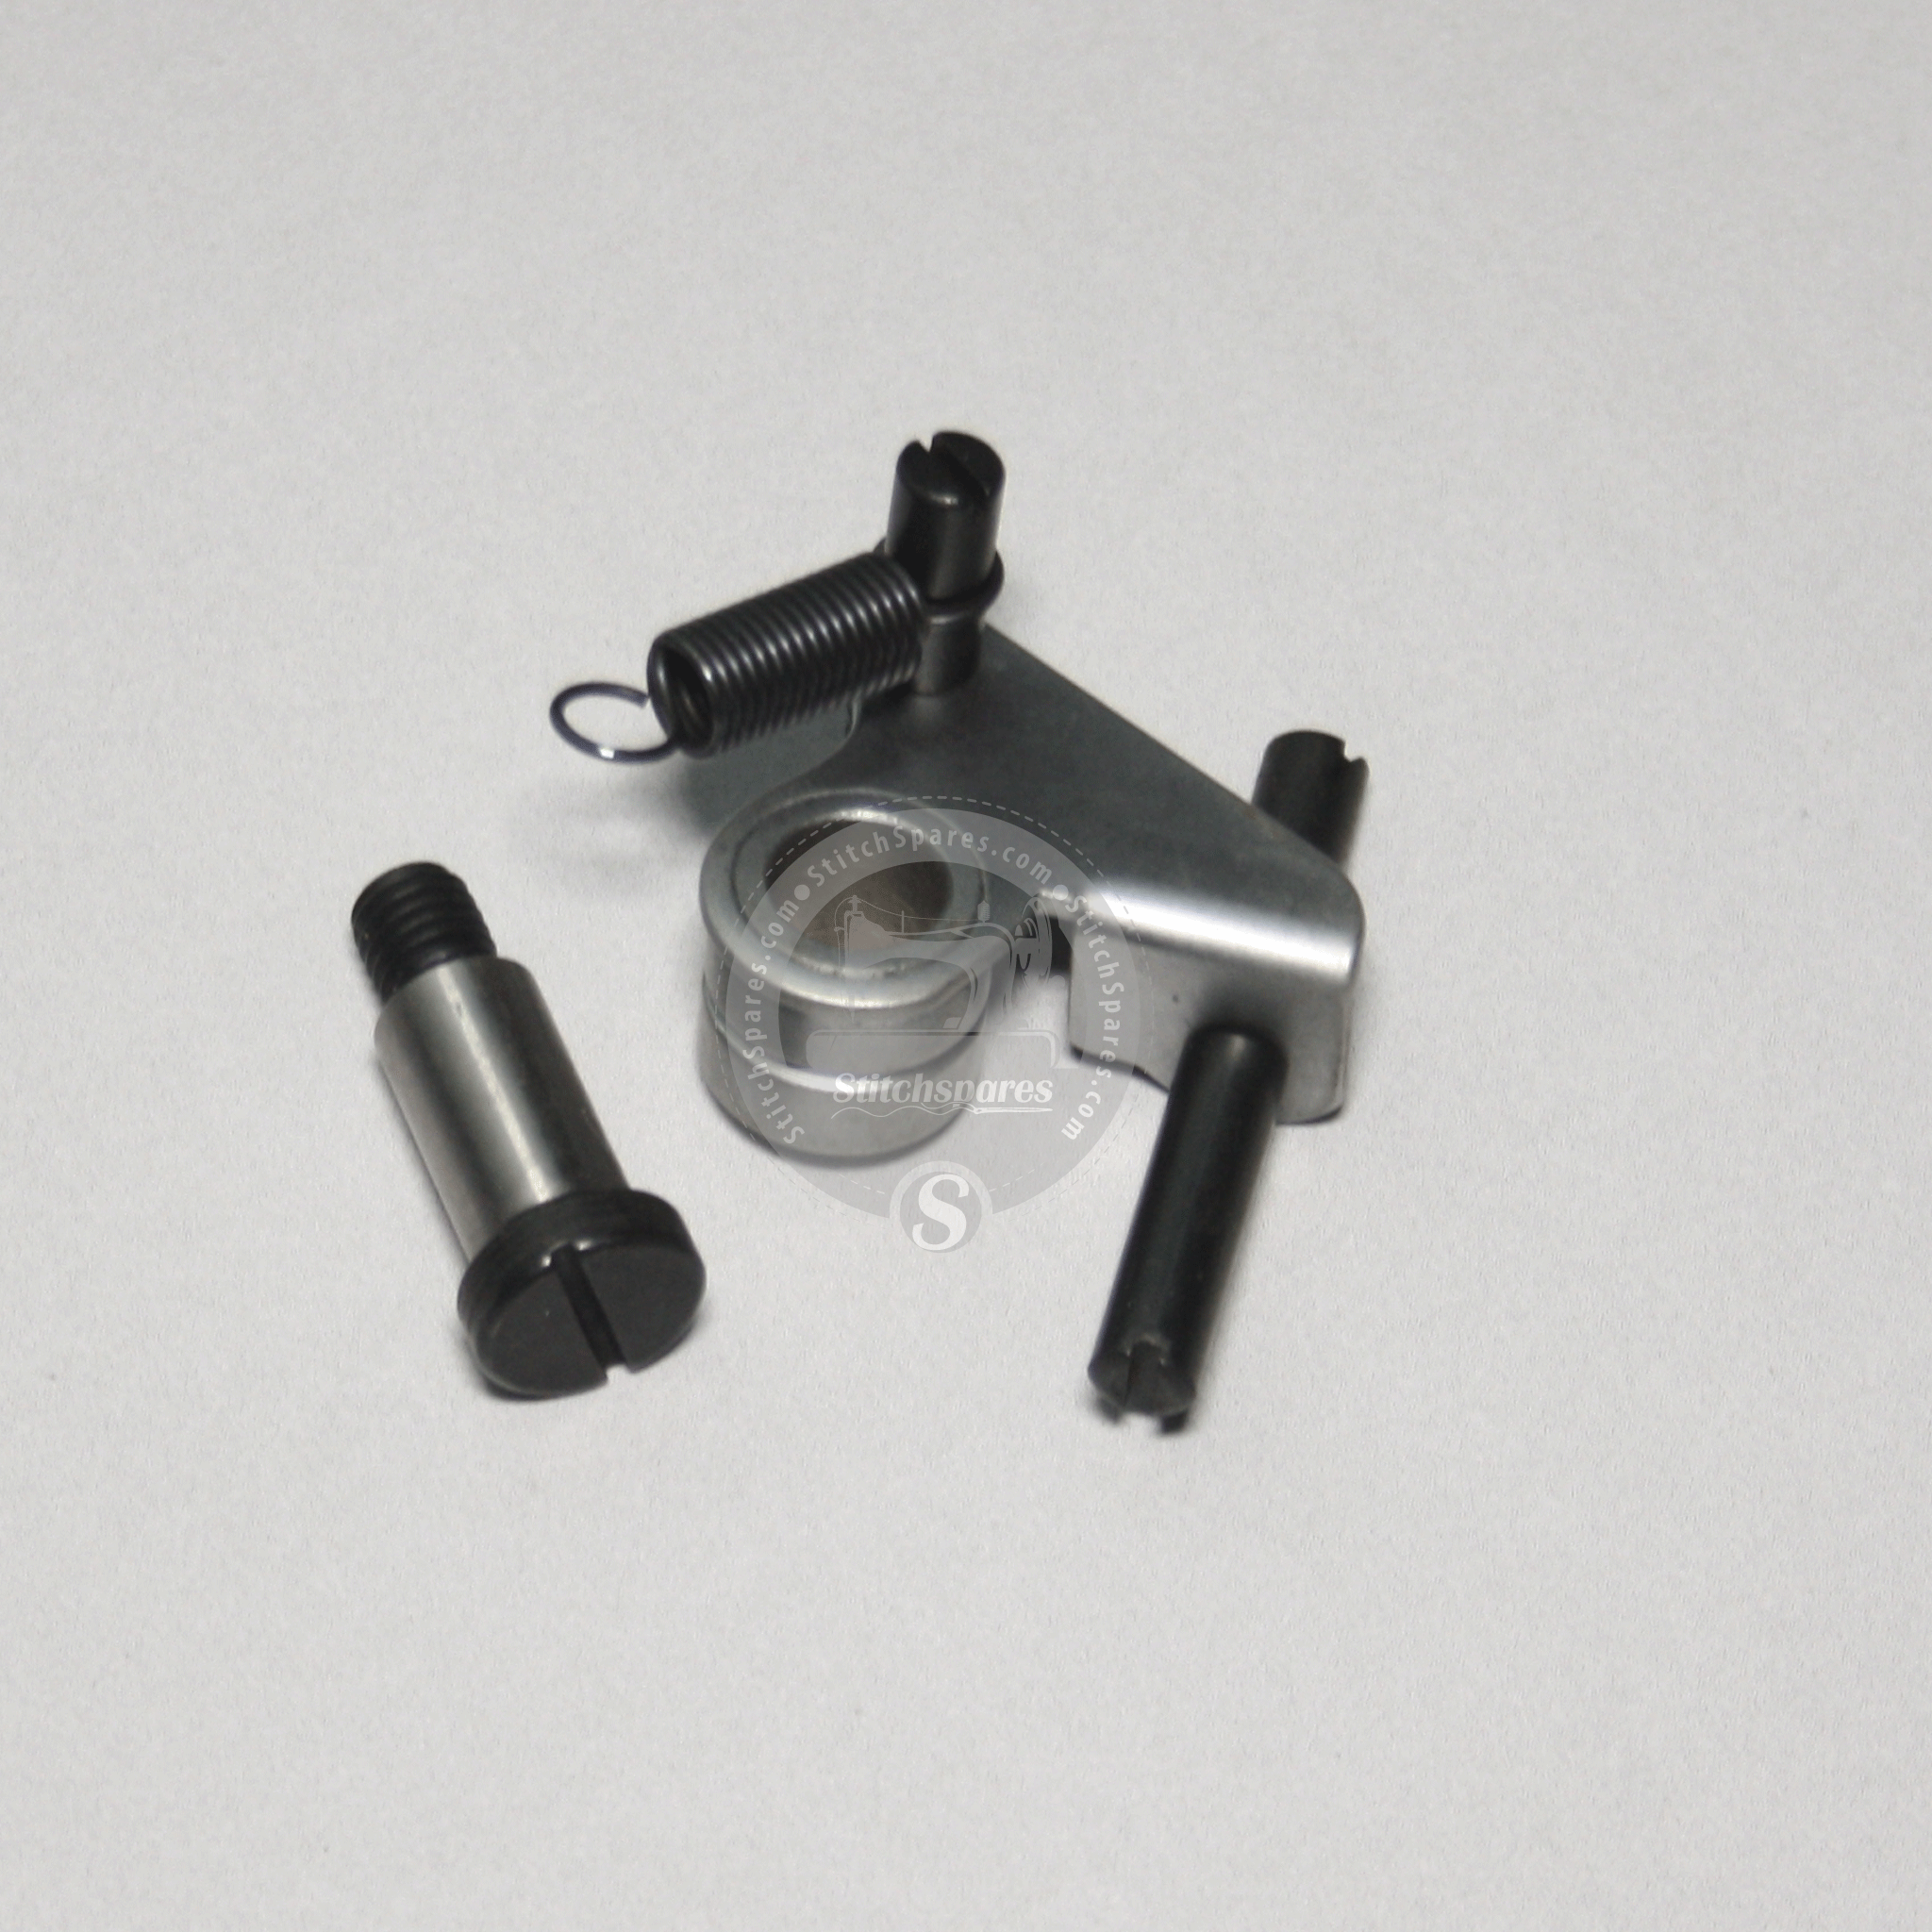 Montaje de pinza de hilo para JUKI MB-372, MB-373, MB-373N, MB-377A (NÚMERO DE PARTE B2031-372-0A0) Pieza de repuesto para máquina de coser de punto de botón